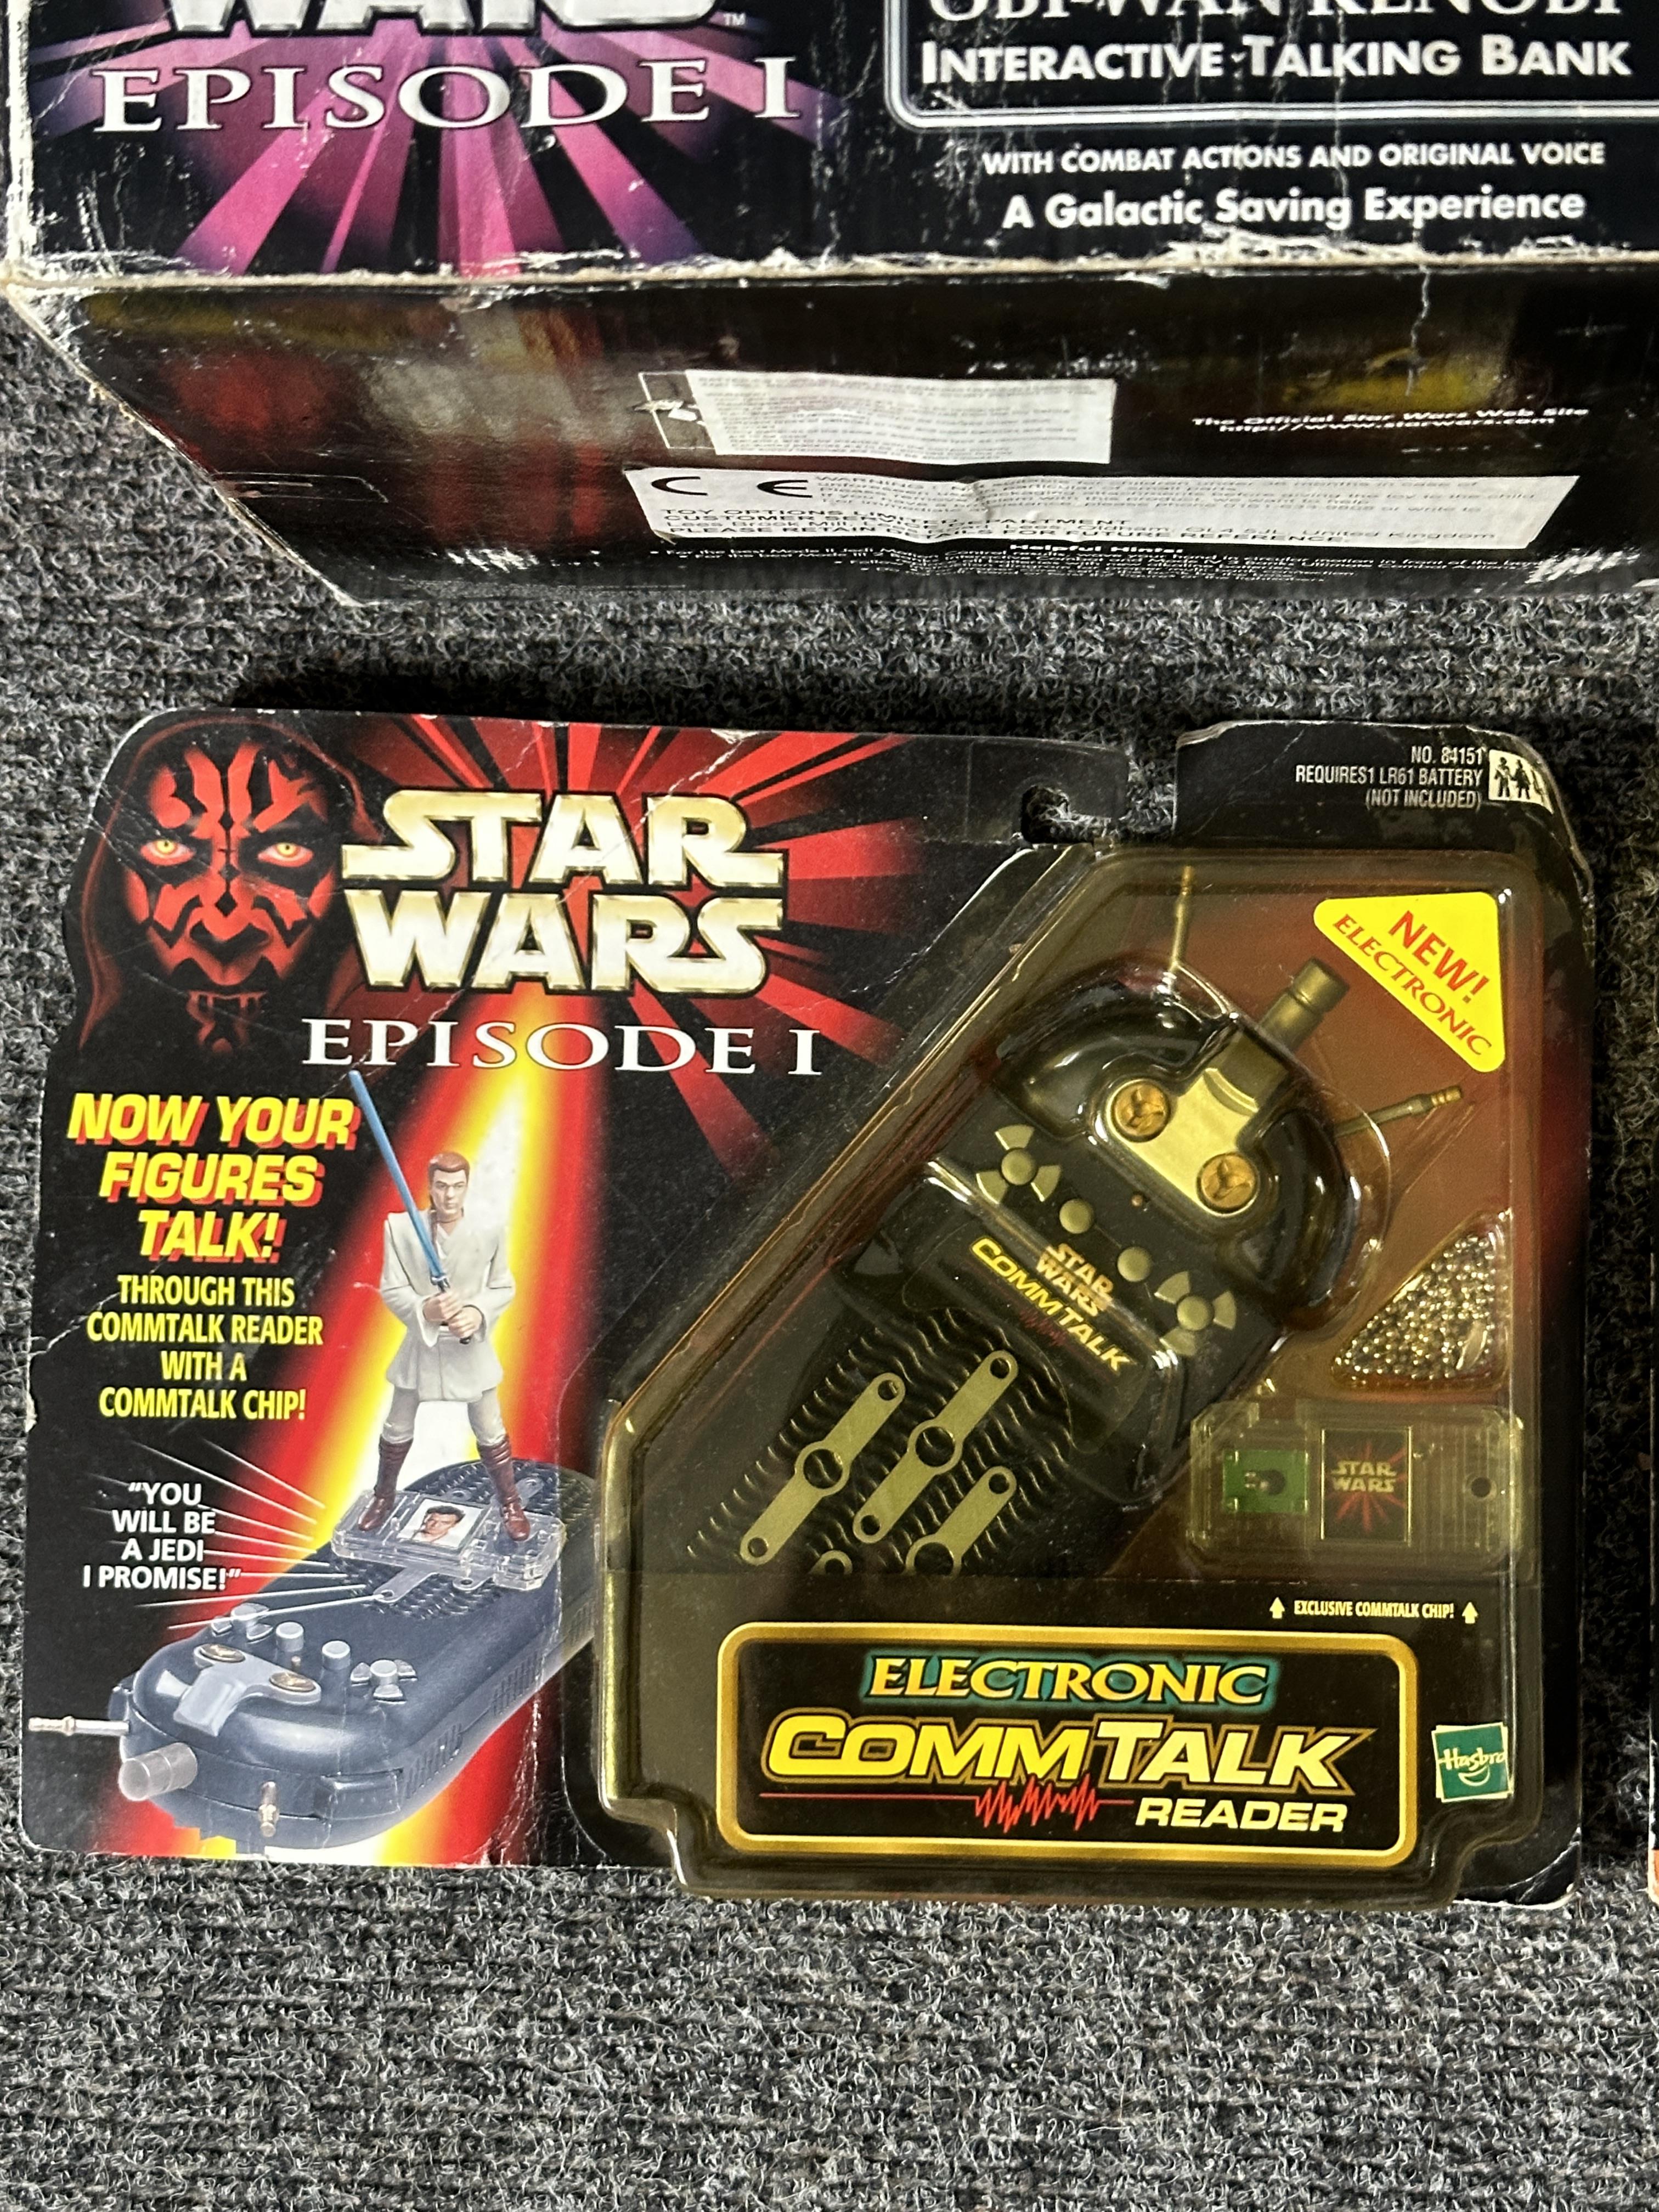 Assortment of Star Wars Memorabilia - Image 5 of 11